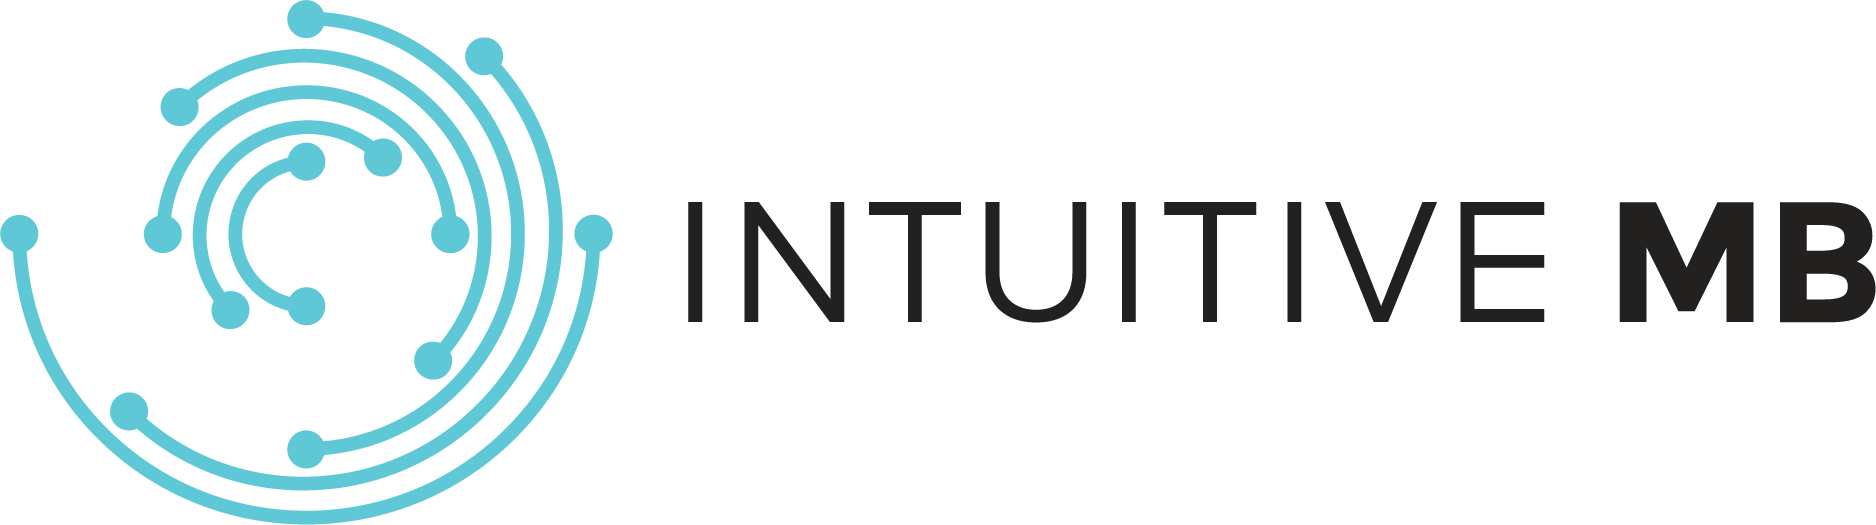 IntuitiveMB logo